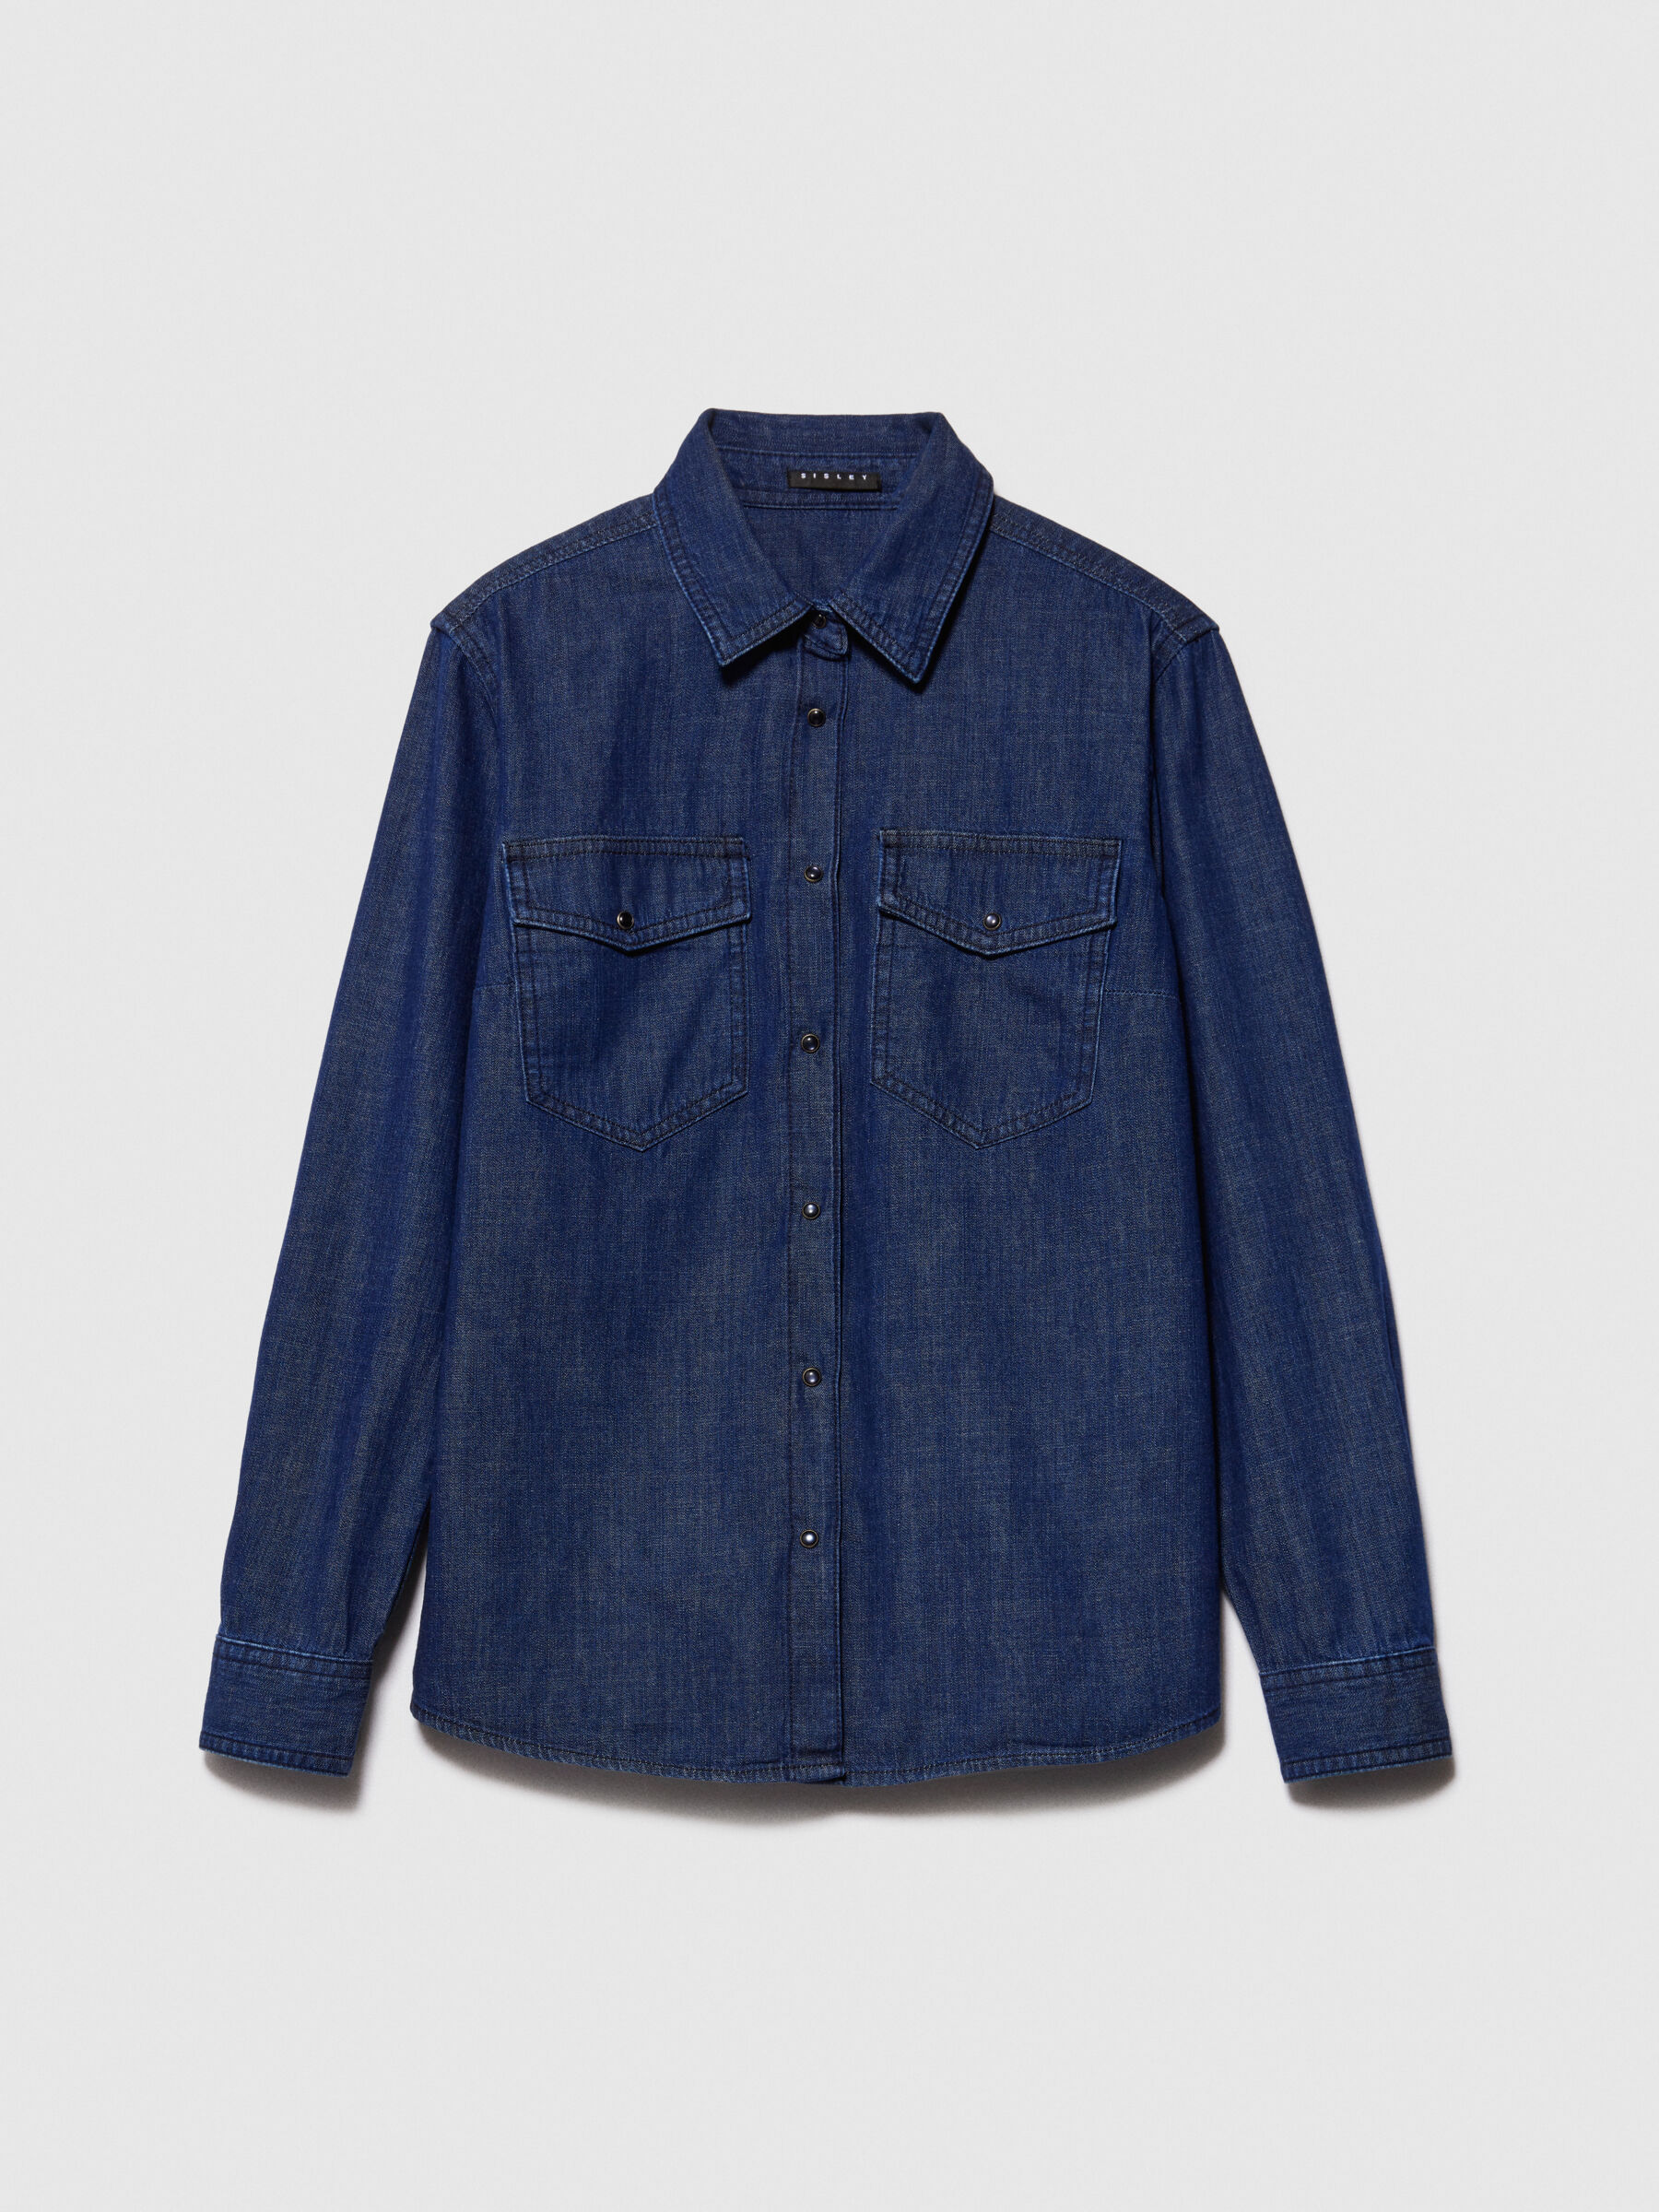 Asterope Organic Cotton Chambray Embroidered Shirt - Dark Indigo Blue